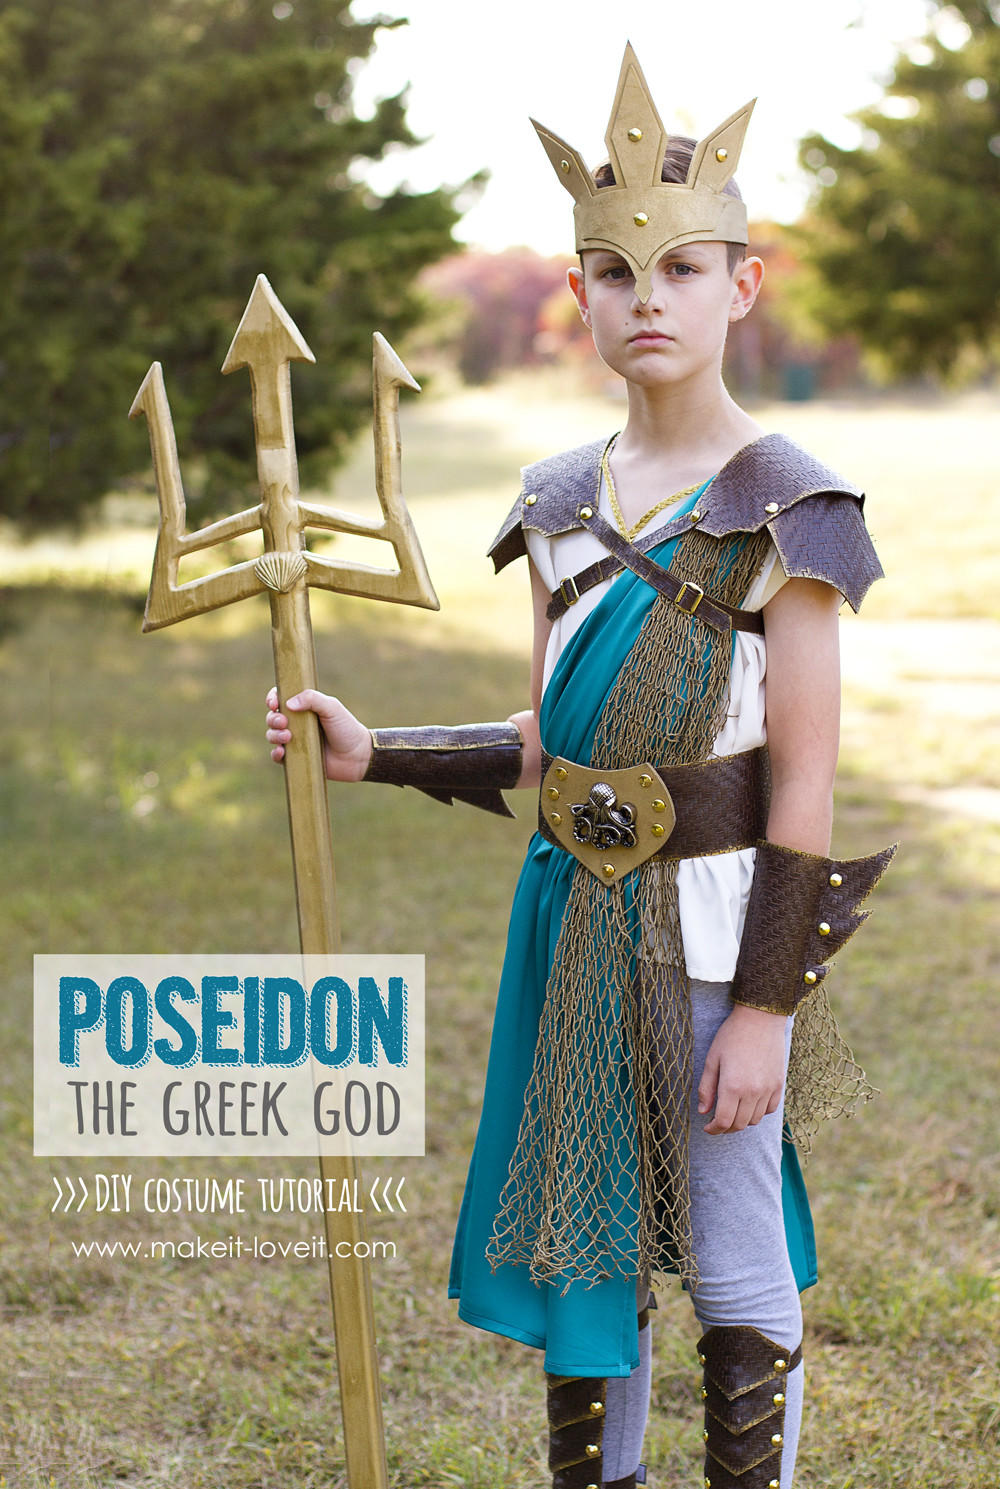 Best ideas about Greek God Costume DIY
. Save or Pin DIY Greek God Costume POSEIDON Now.